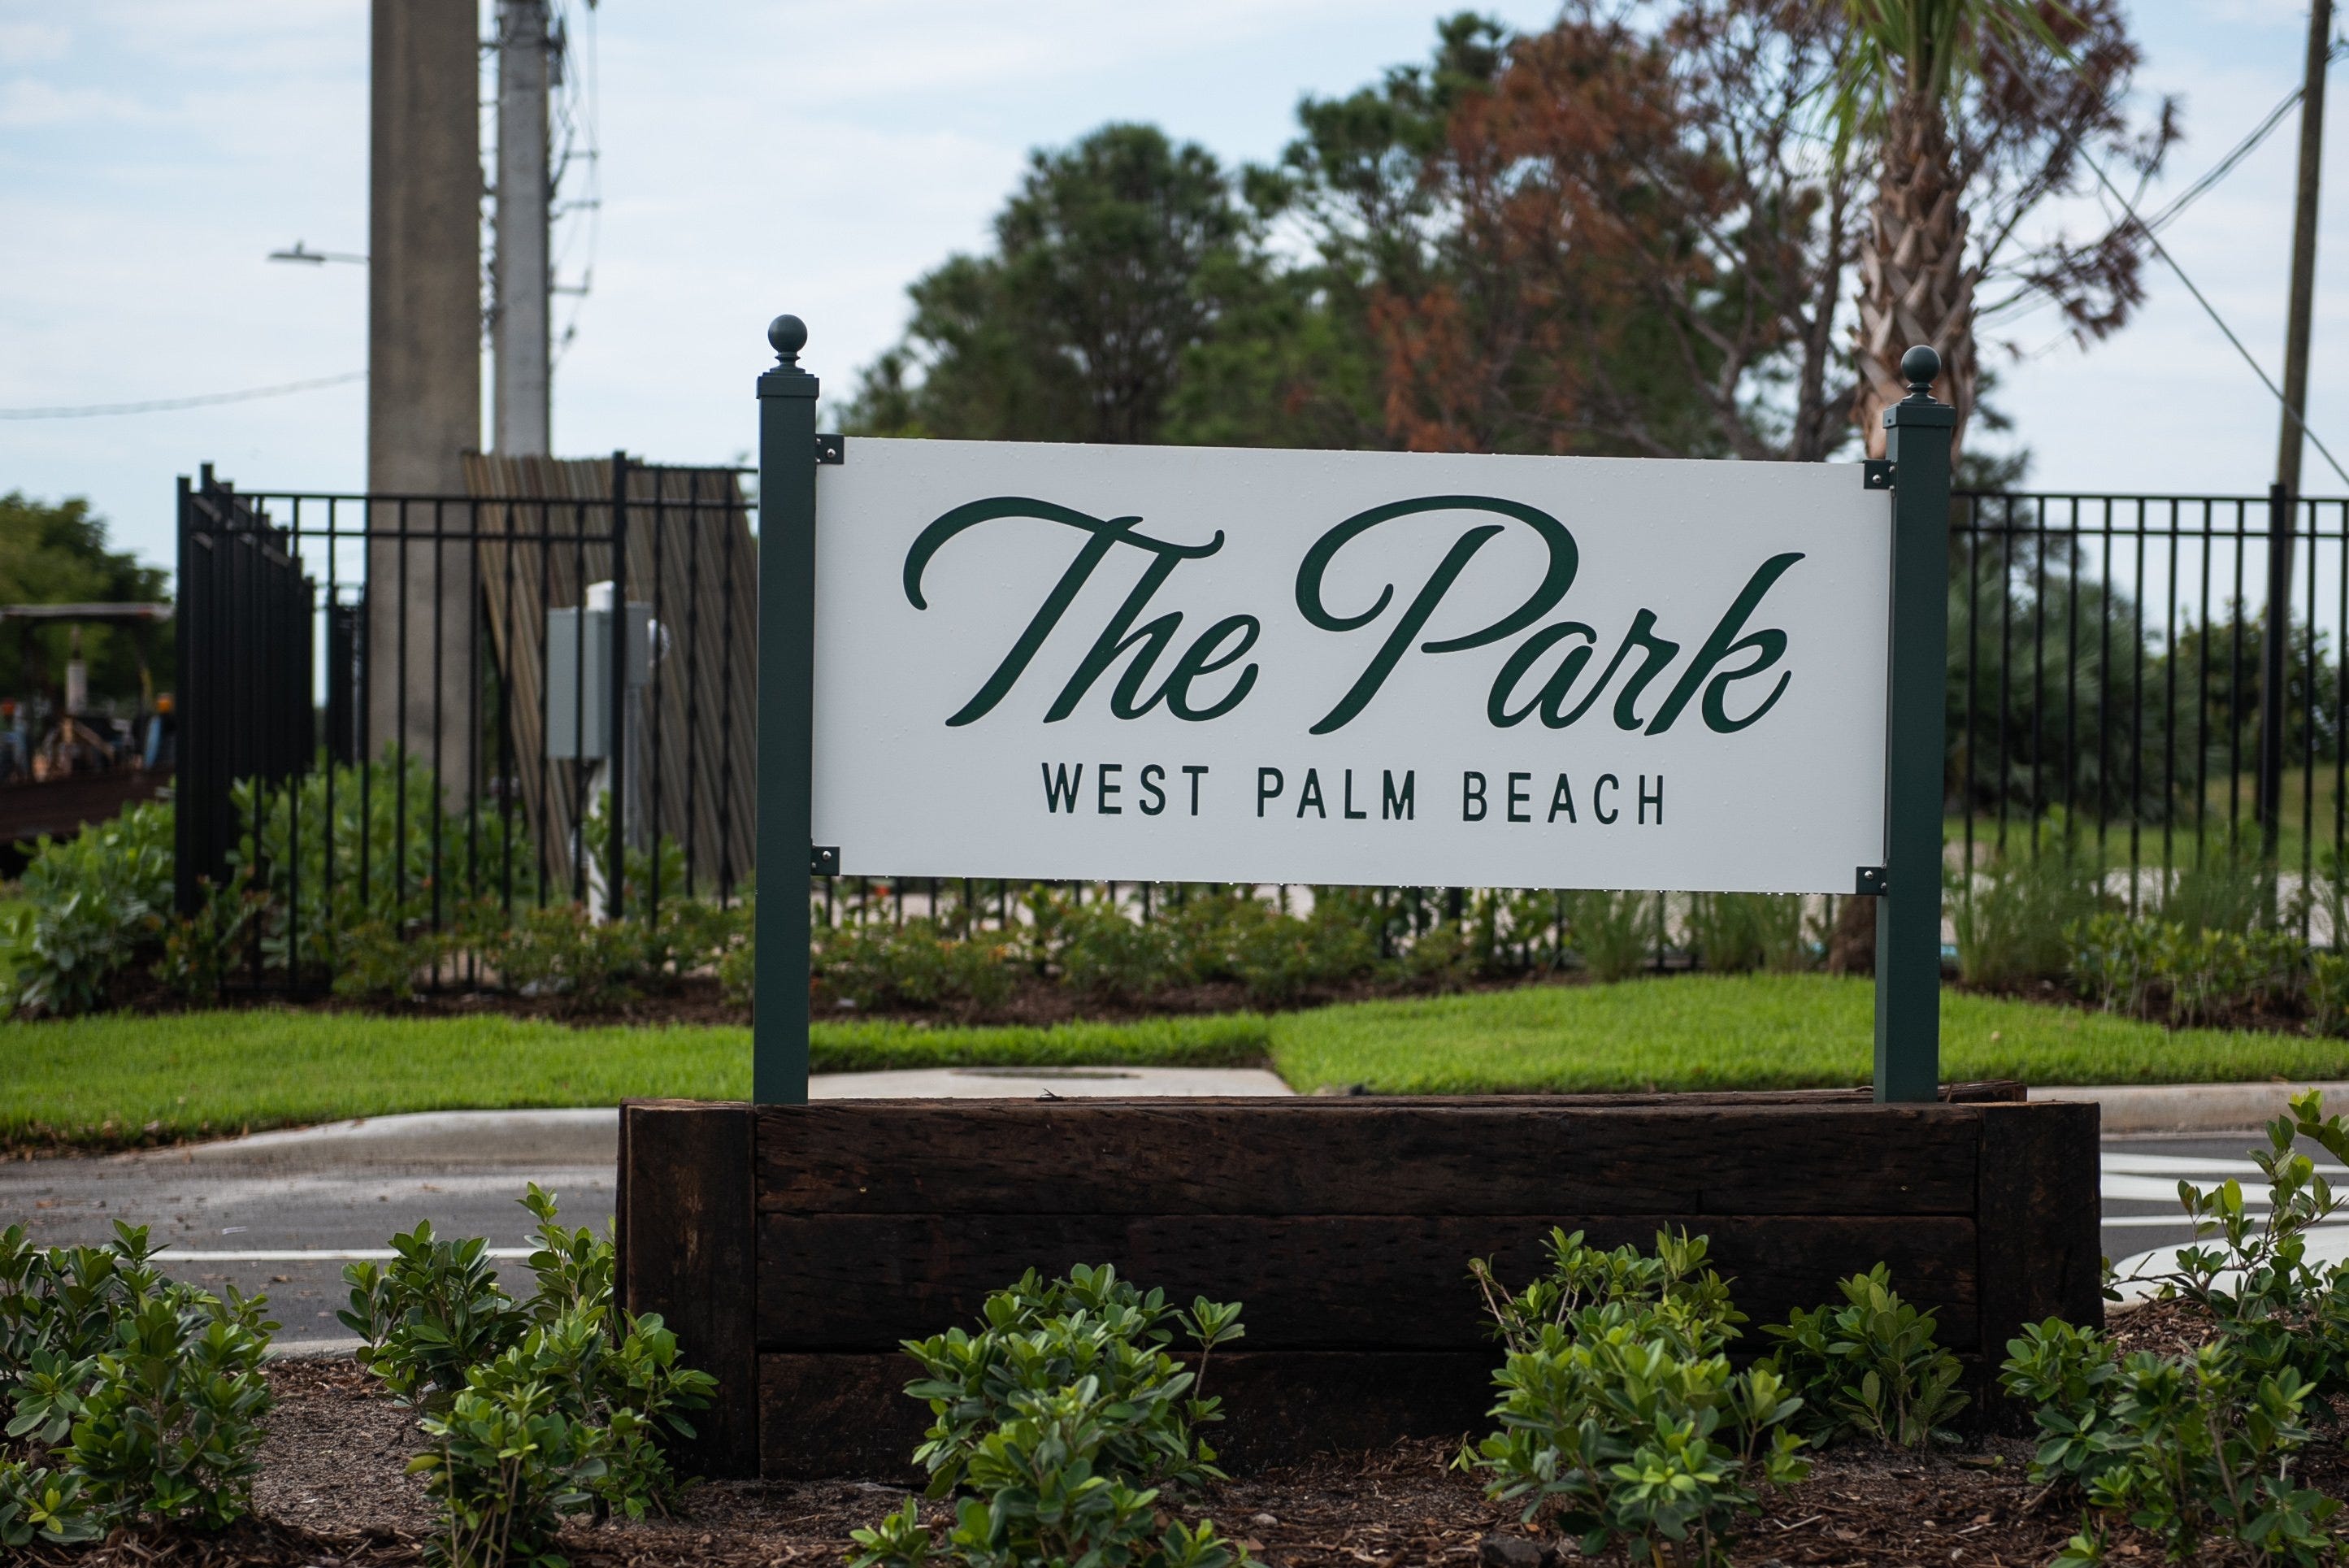 The Park West Palm Beach